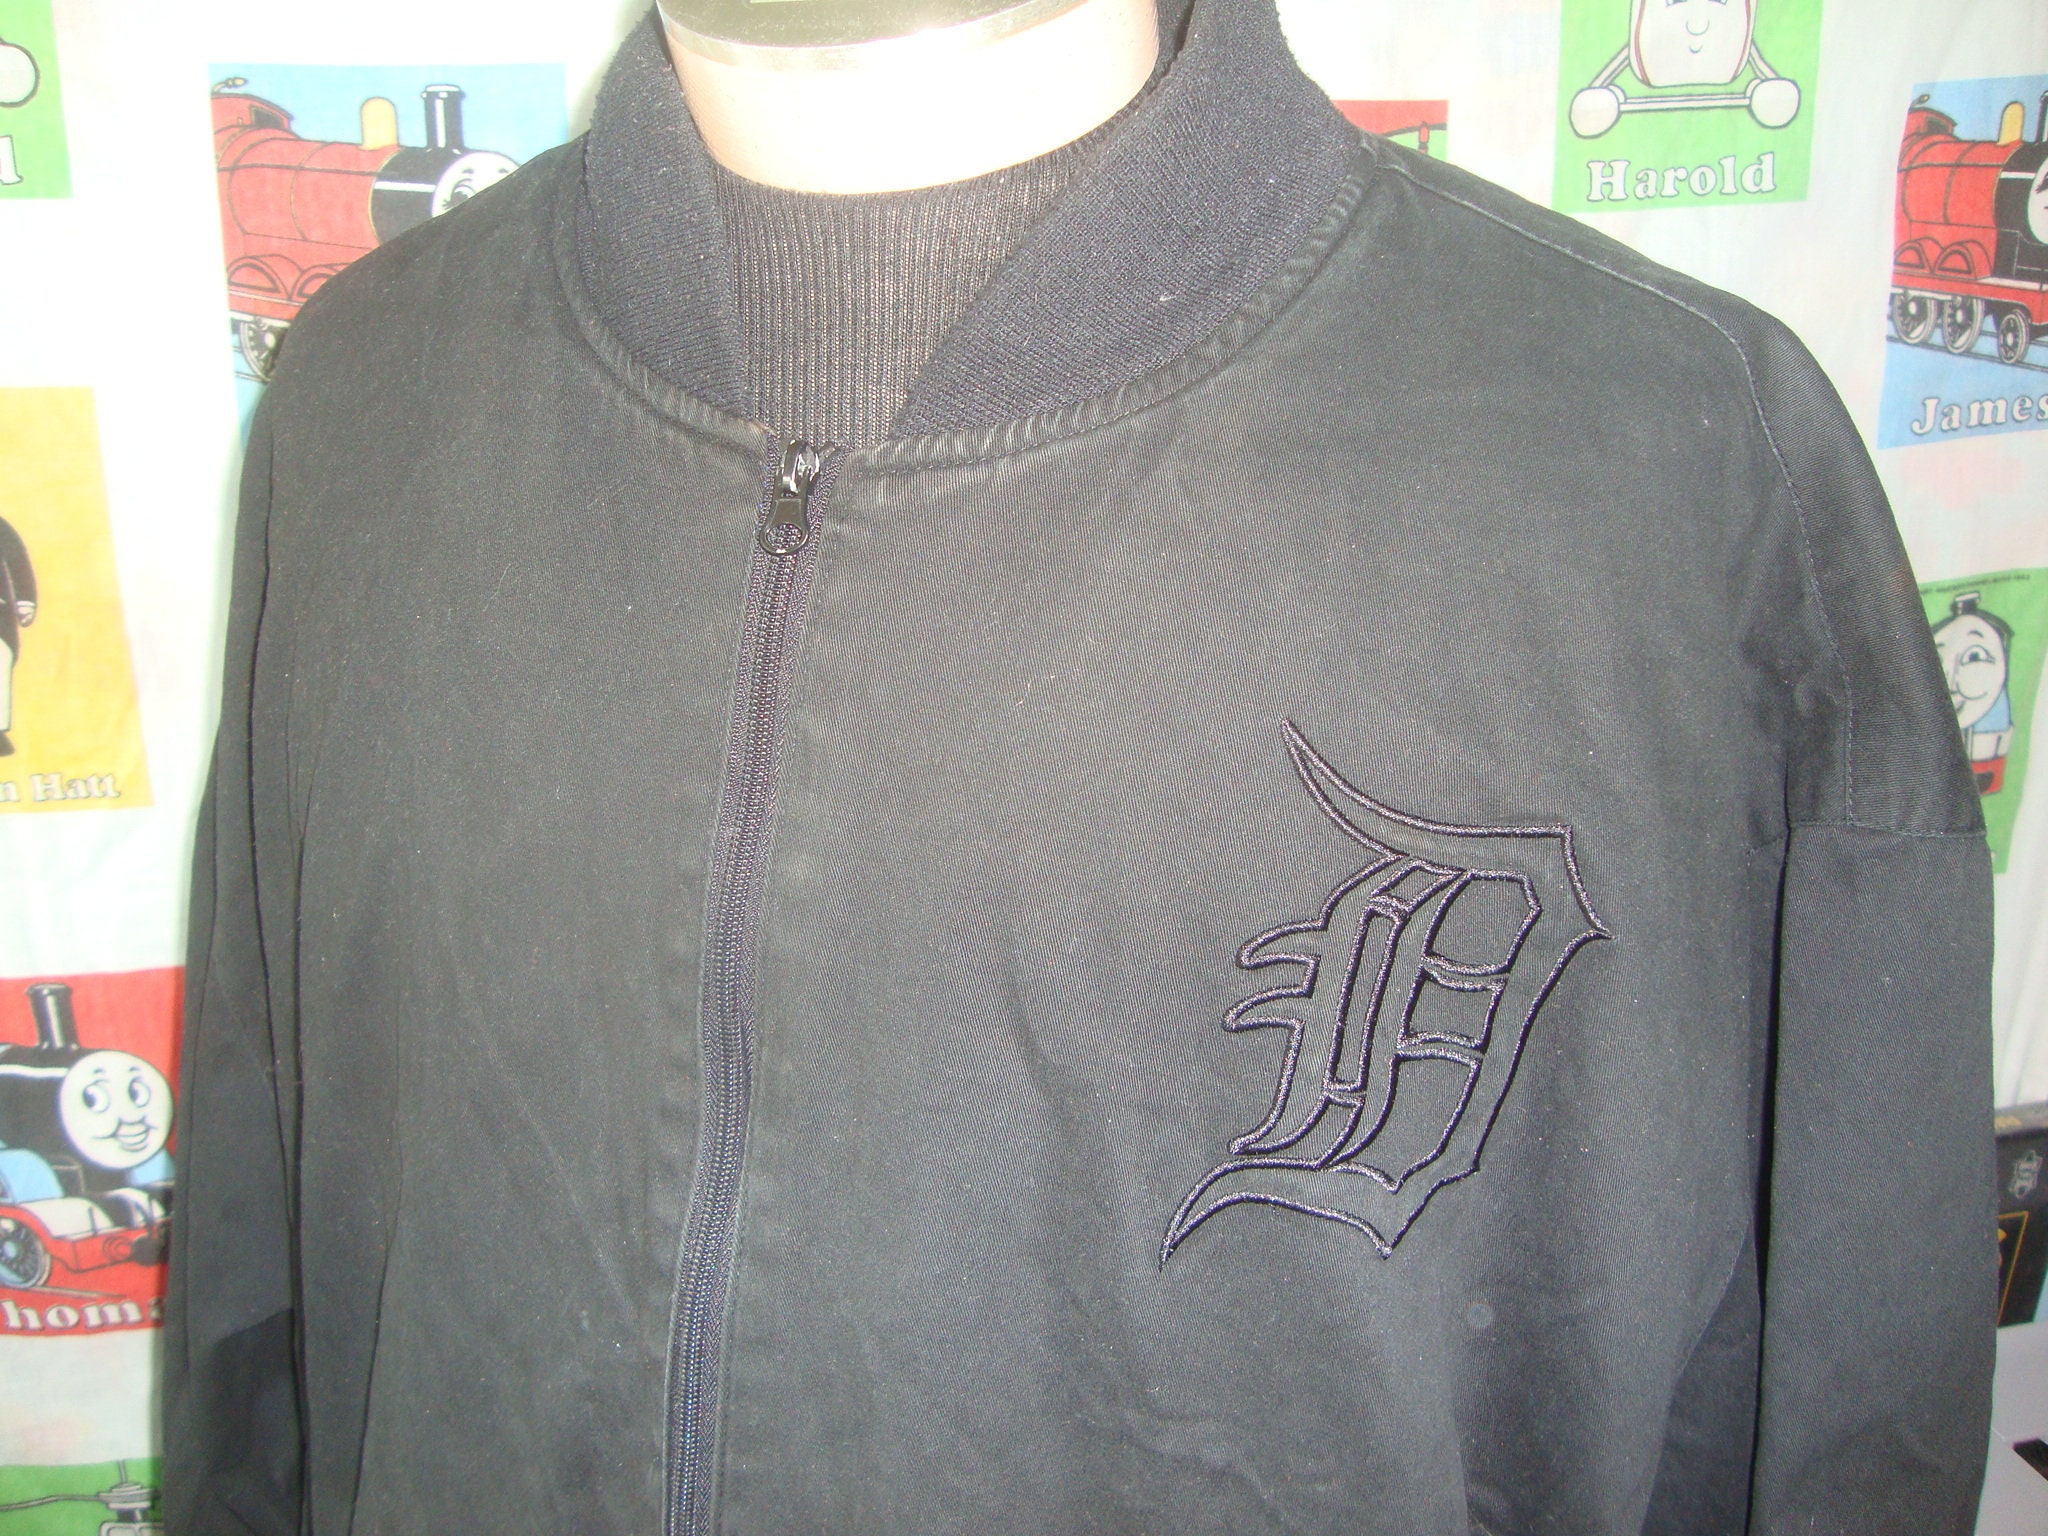 Javier Báez 28 Detroit Tigers baseball player Vintage shirt, hoodie,  sweater, long sleeve and tank top